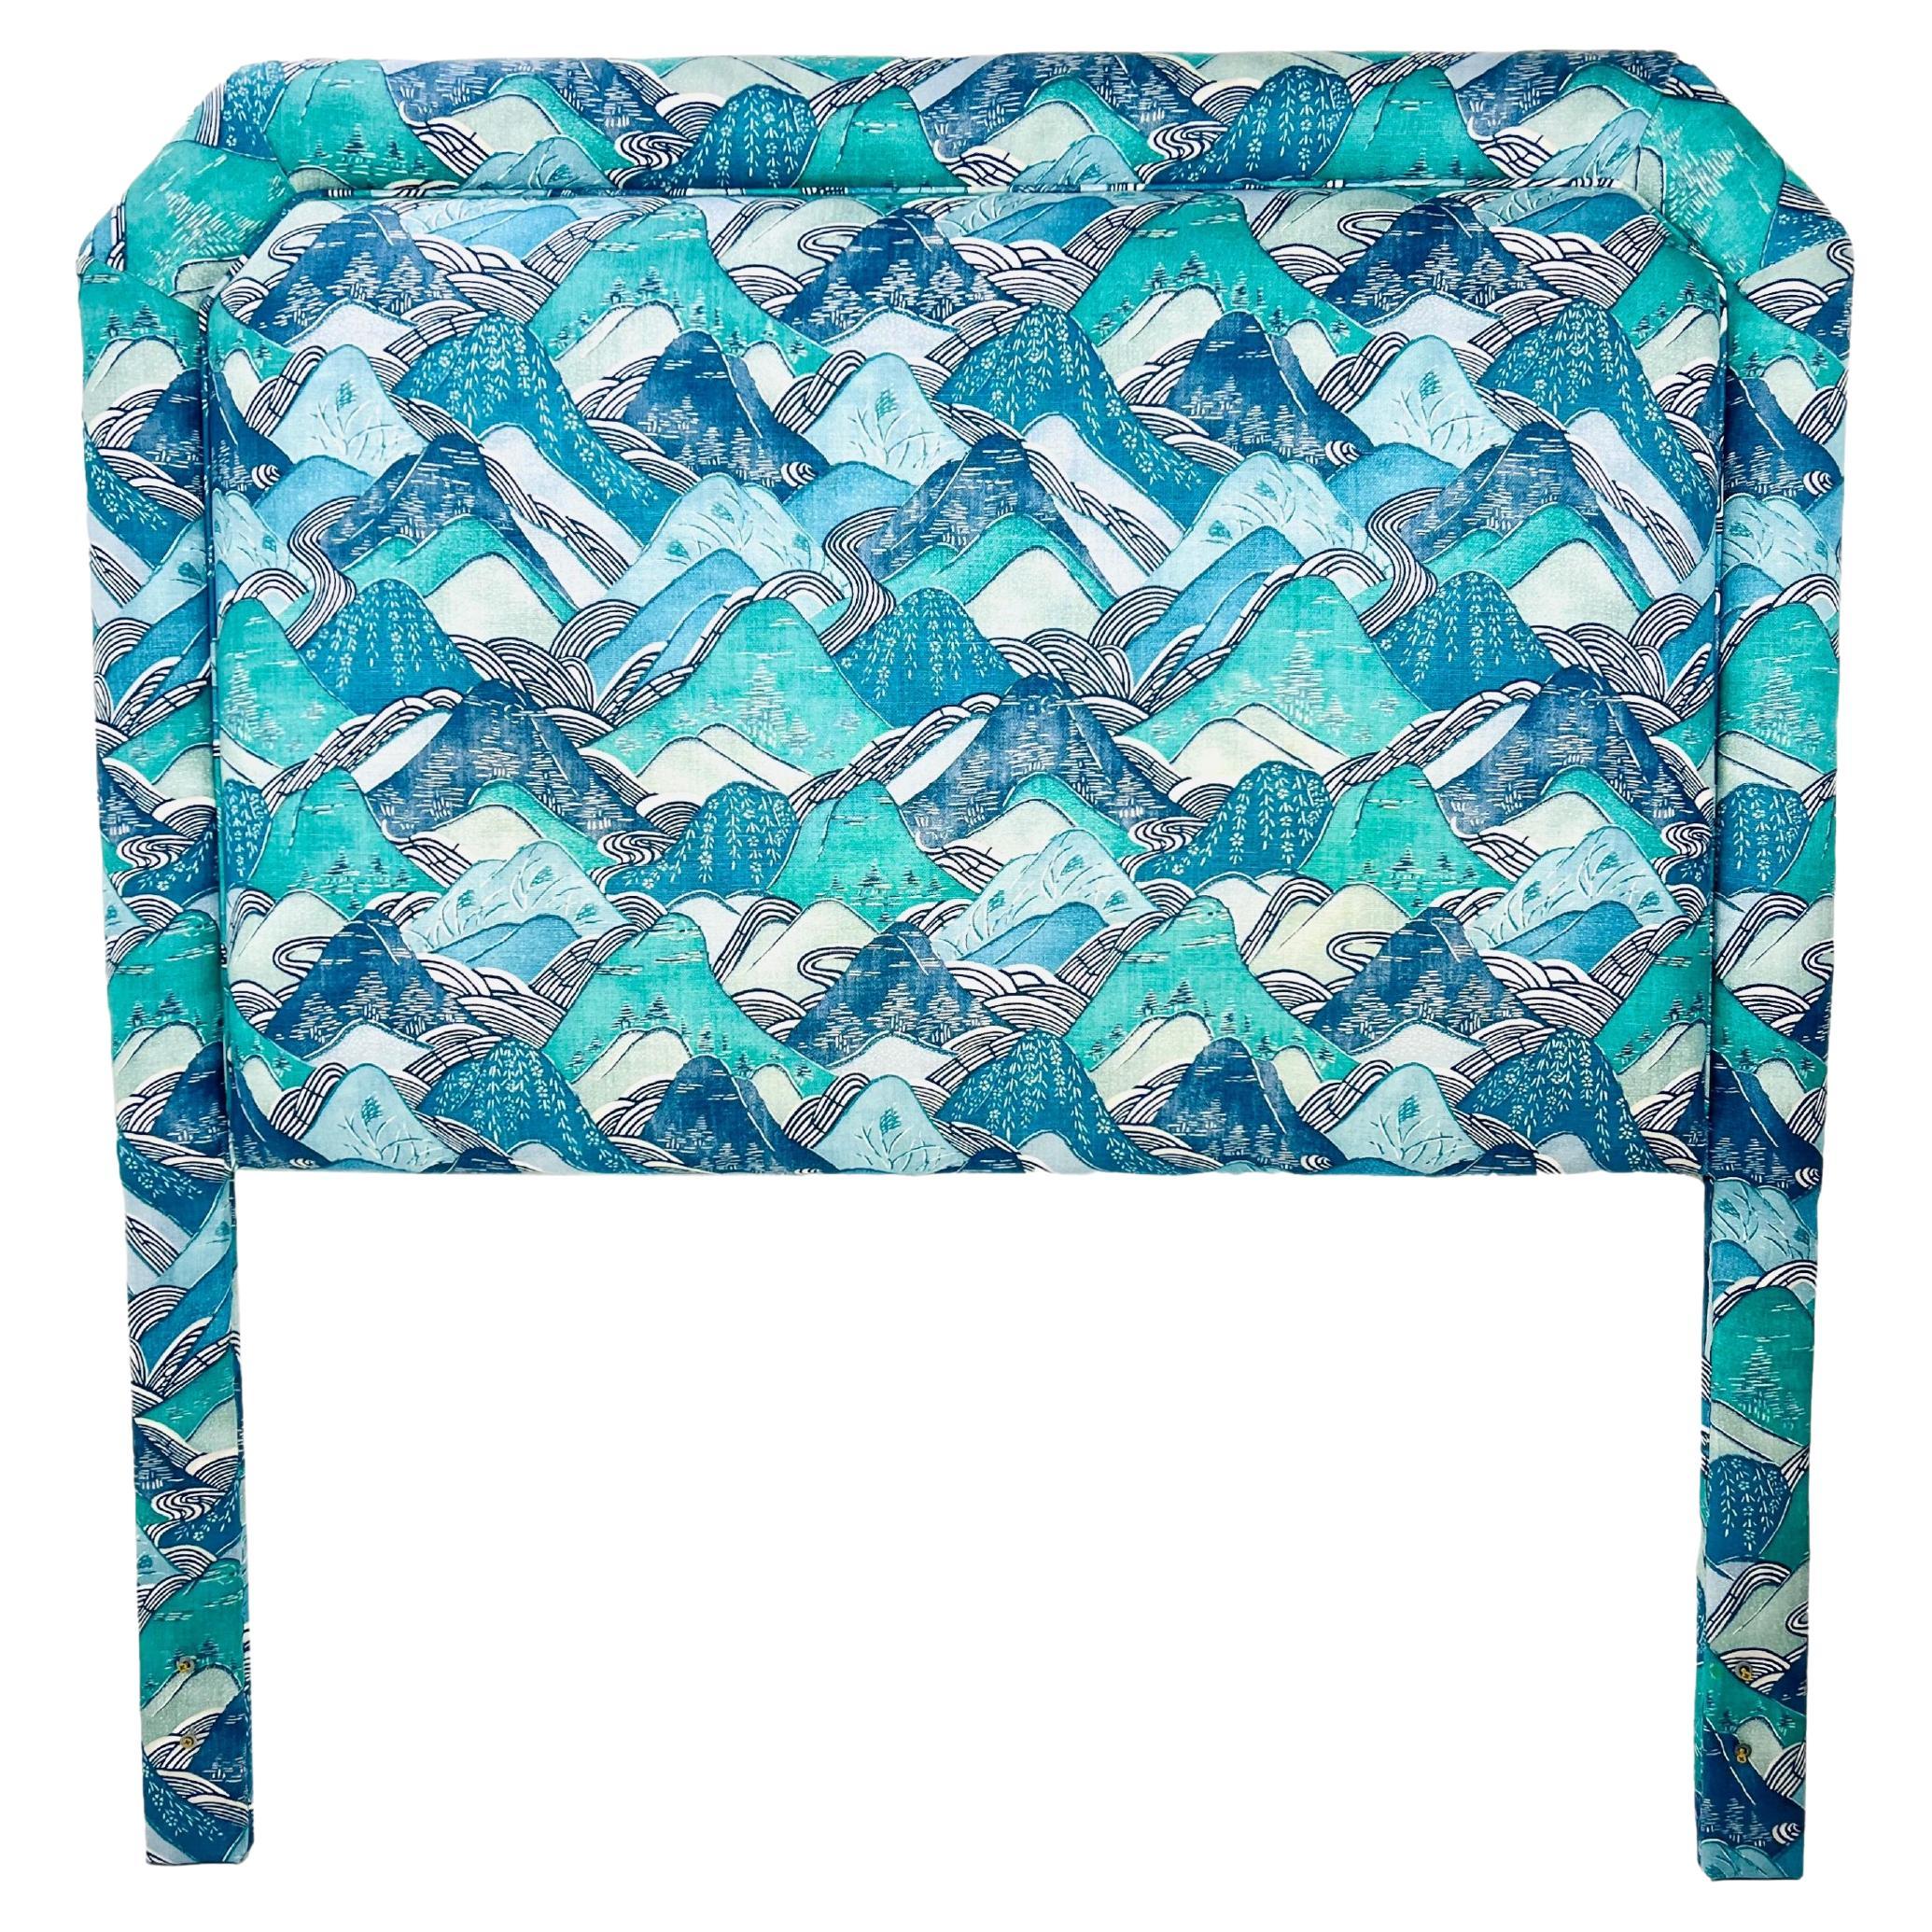 Queen Headboard Upholstered in Teal/Blue Kelly Wearstler Fabric